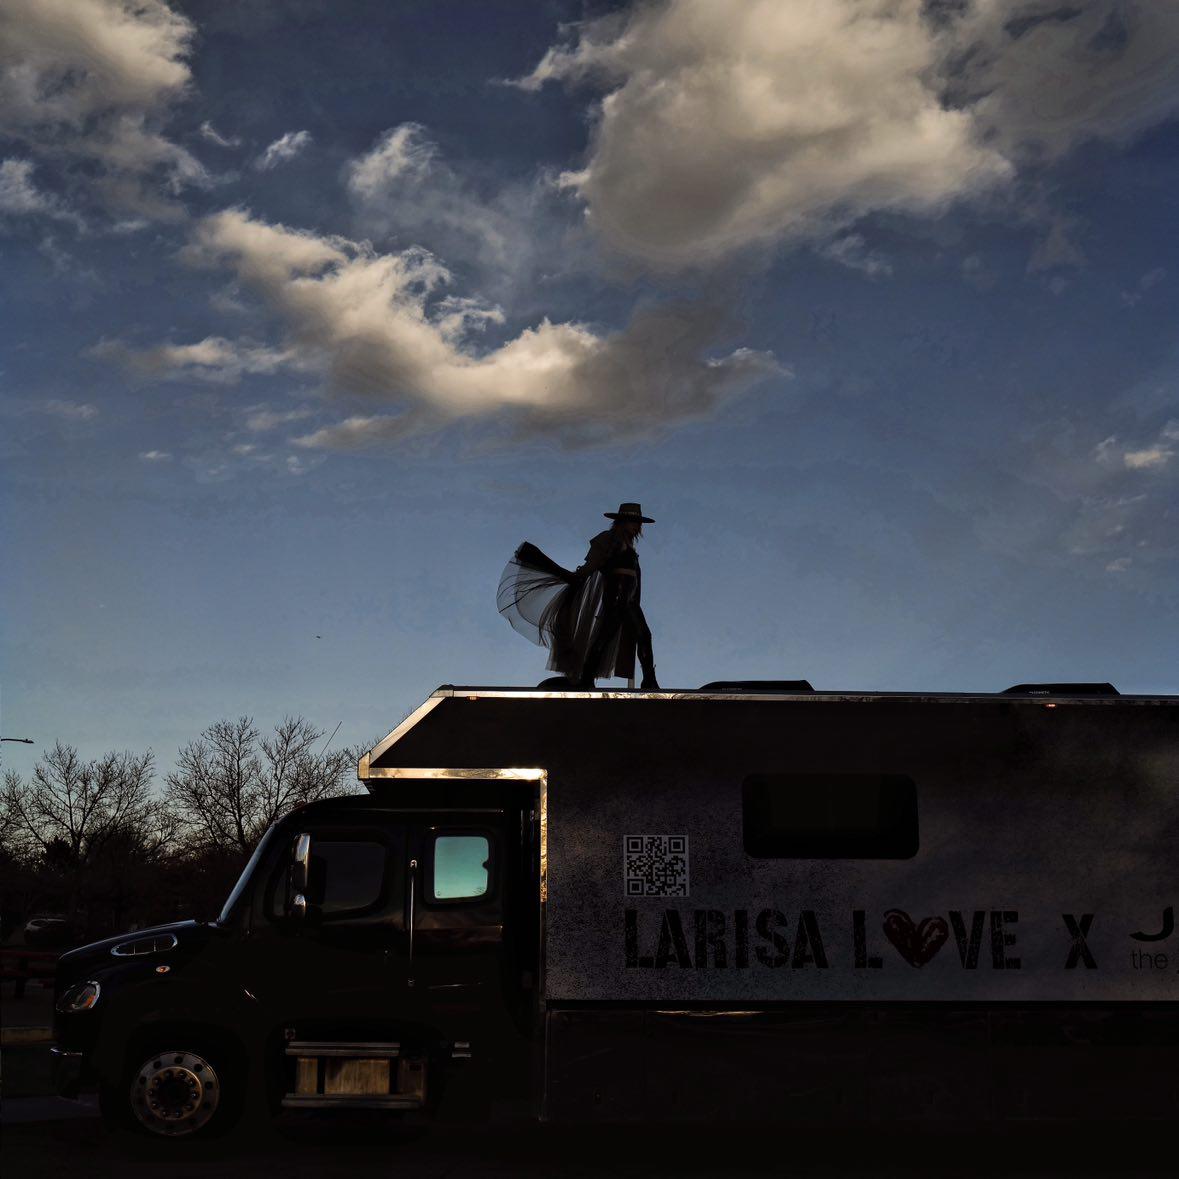 Larisa Love Artist Daydream Tour: October 17 Cuyahoga Falls, OH